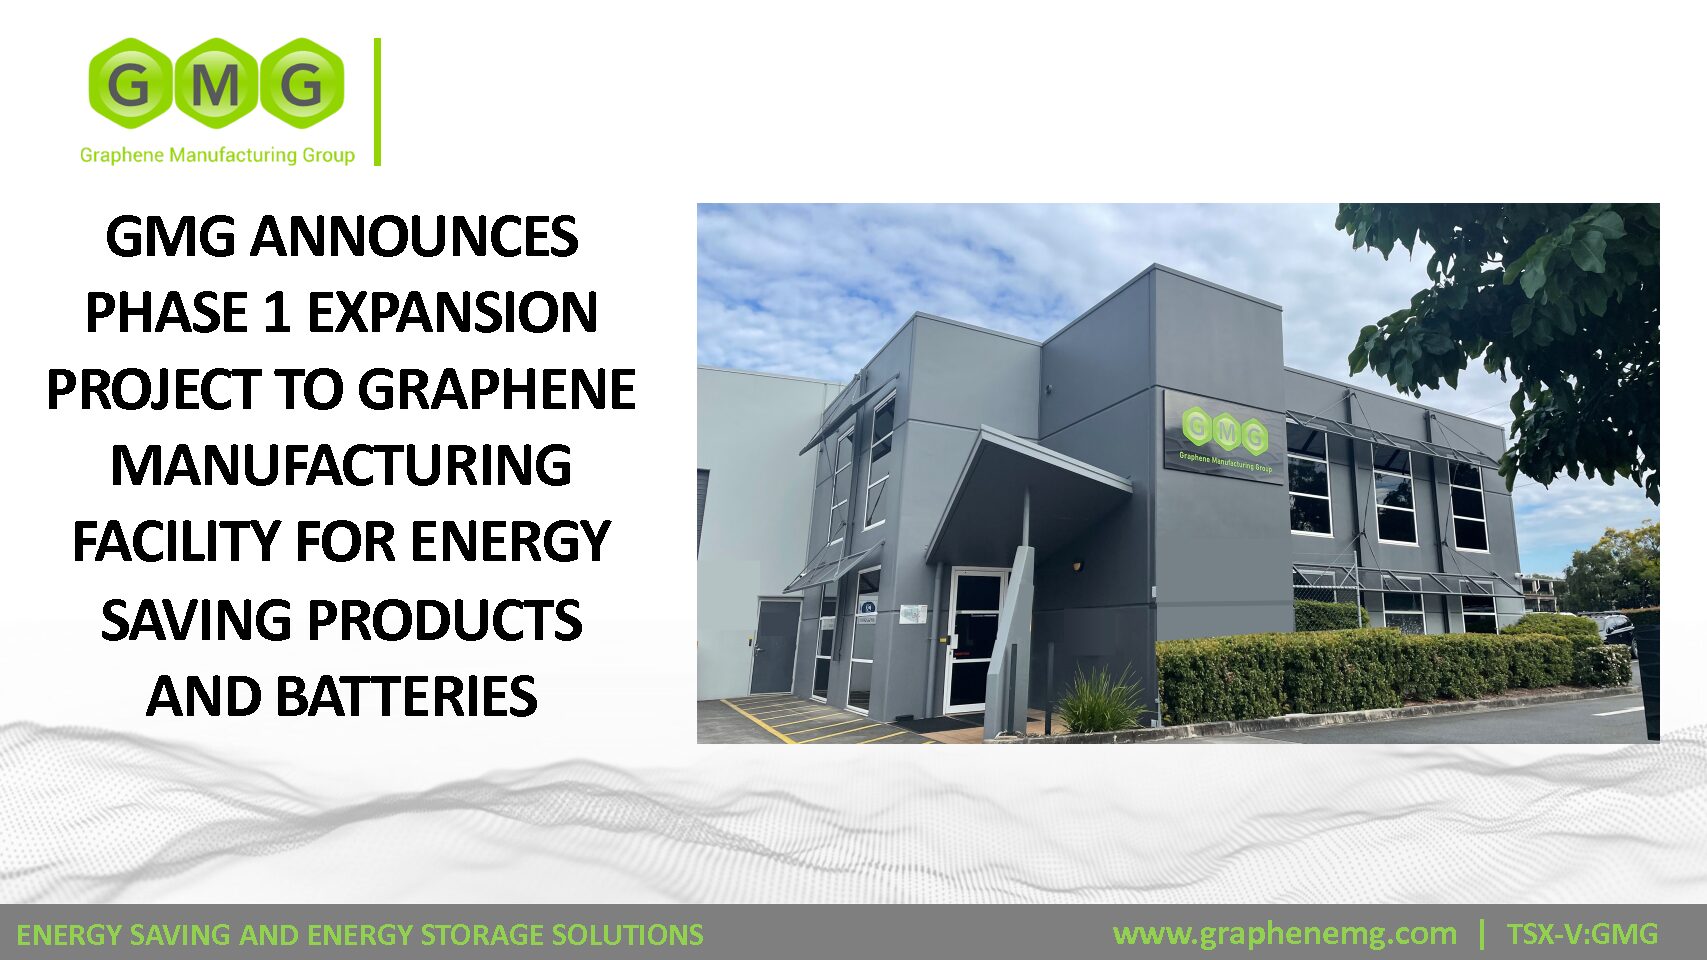 GMG宣布一期扩建石墨烯生产设施，用于节能产品和电池